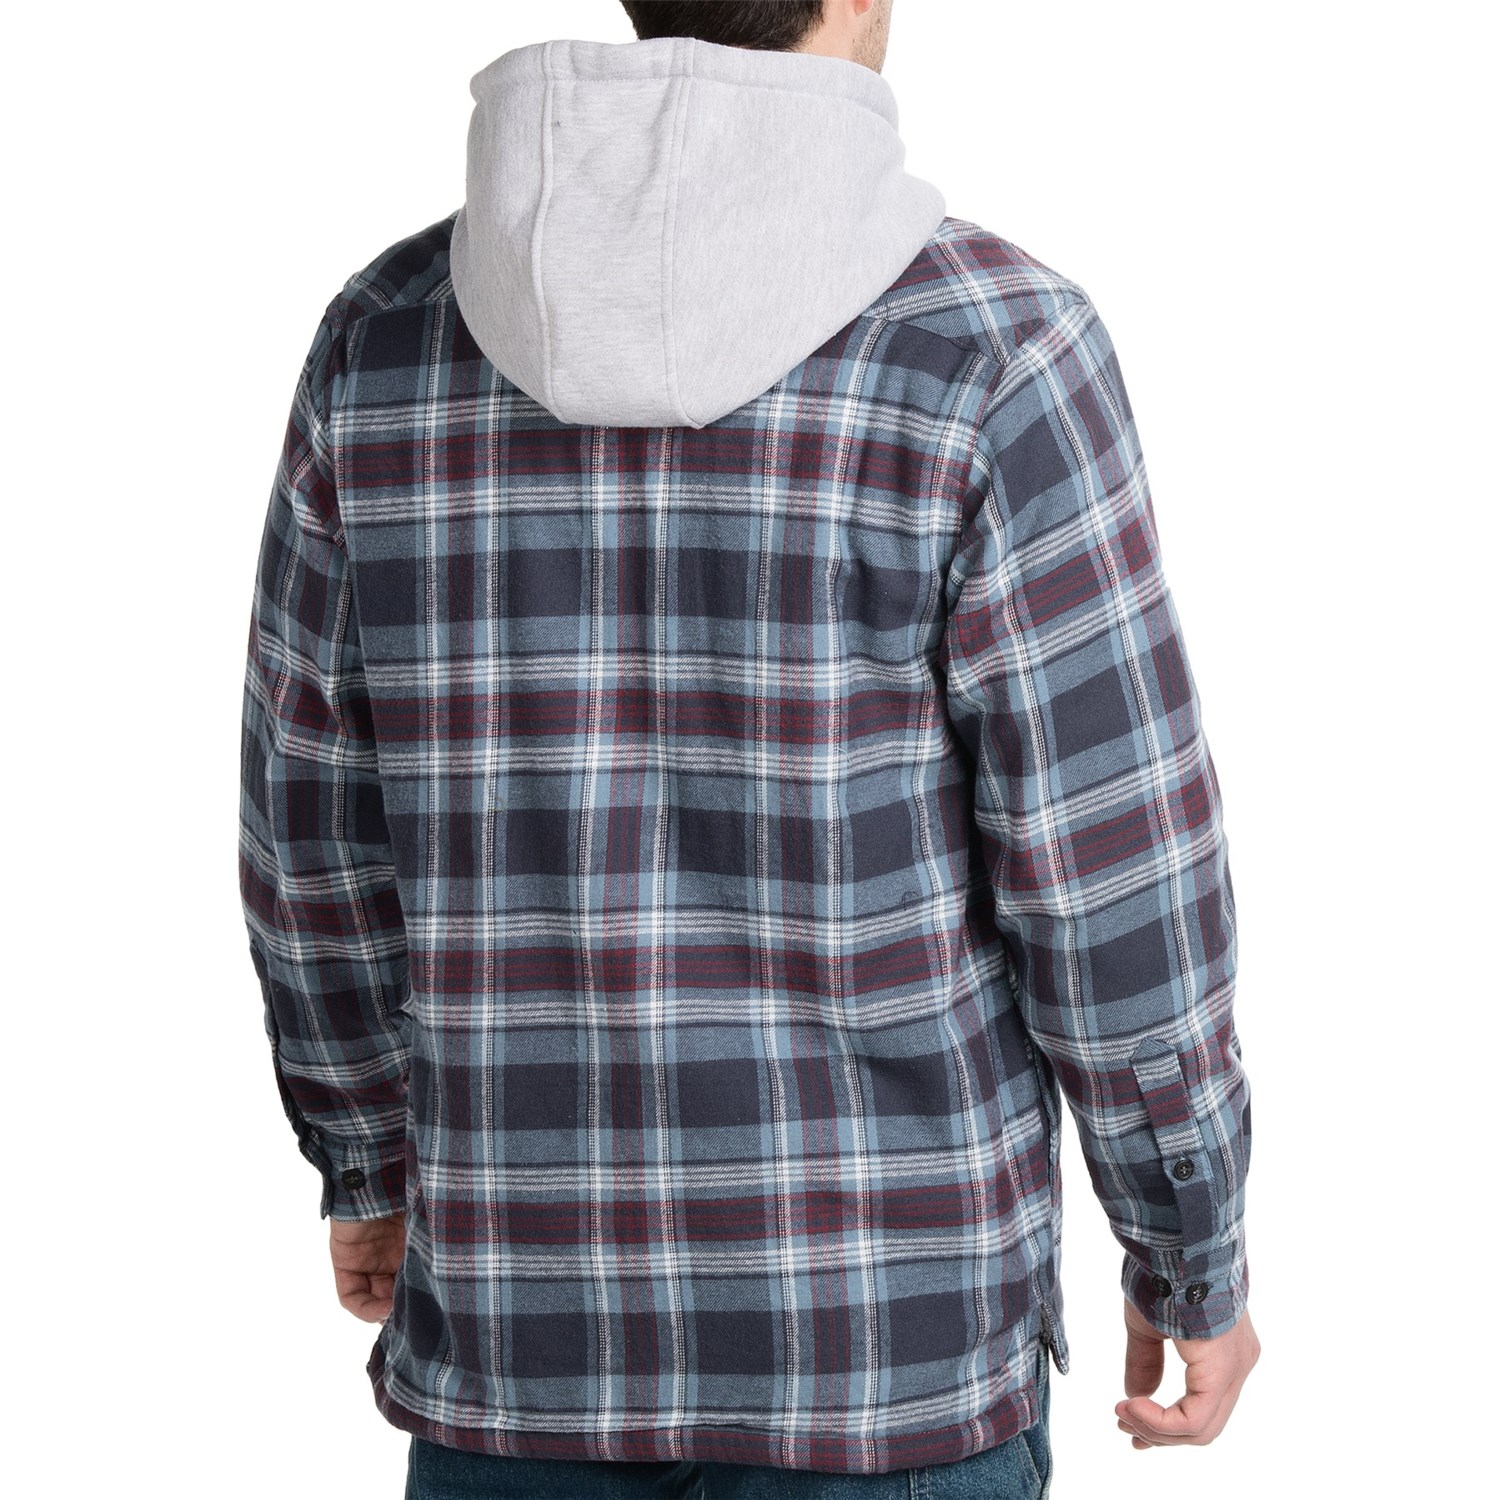 Stanley Hooded Shirt Jacket (For Men) - Save 61%